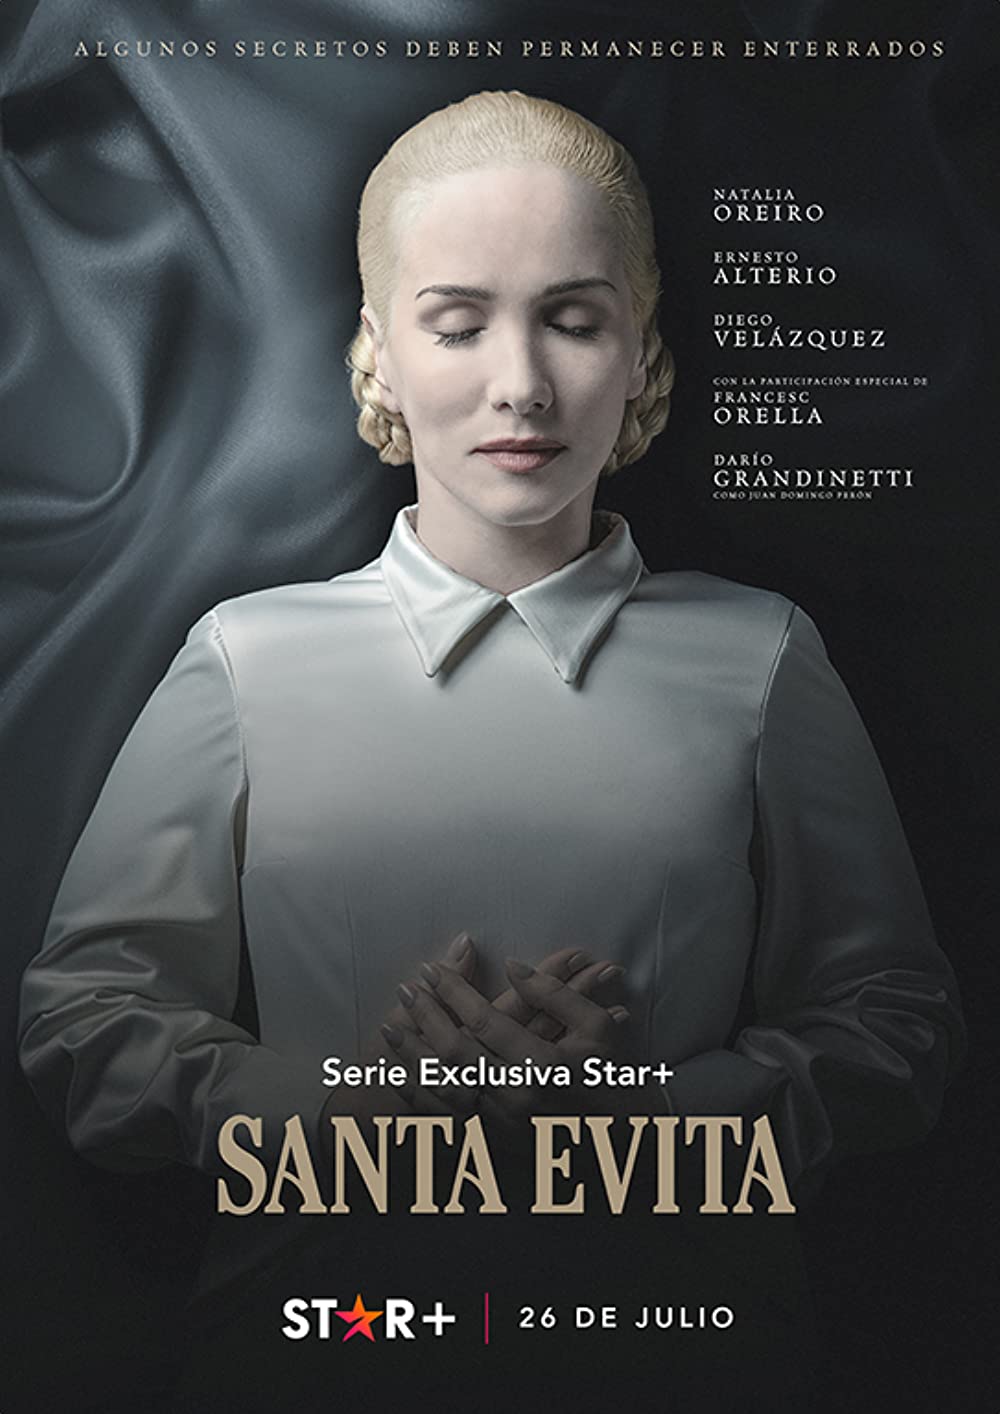 Szent Evita